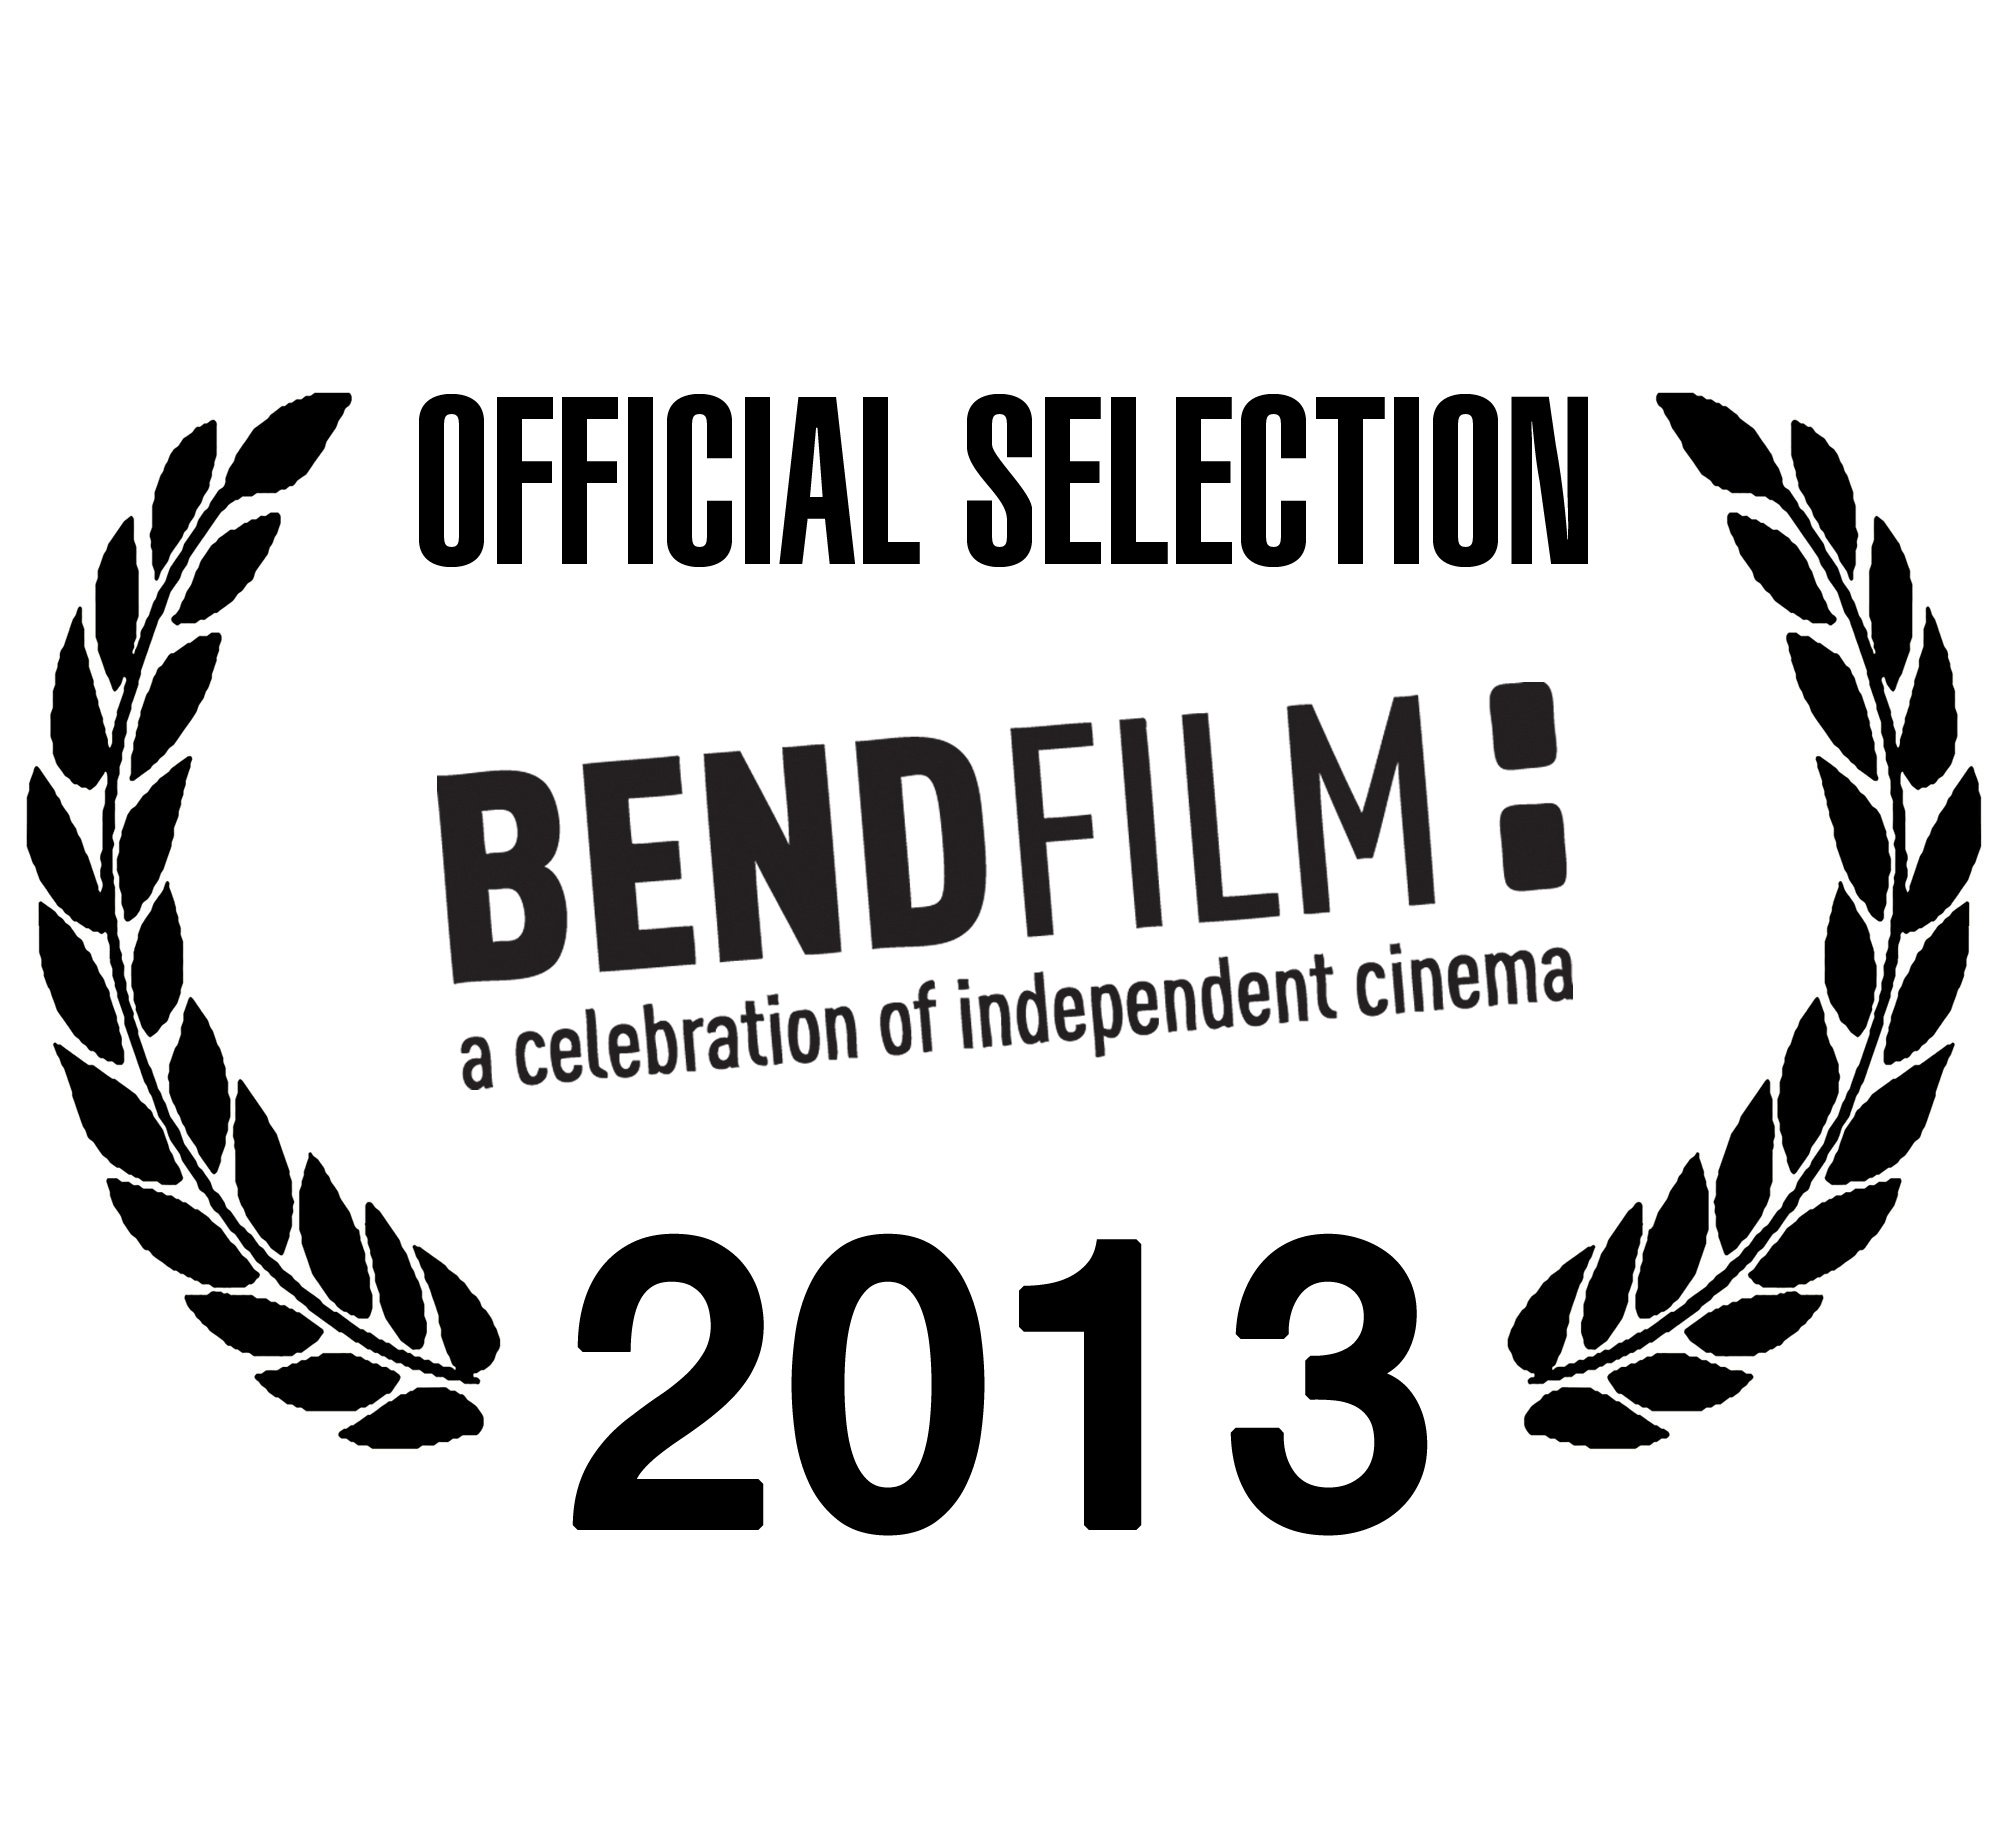 BENDFILM 2013 laurel copy.jpg